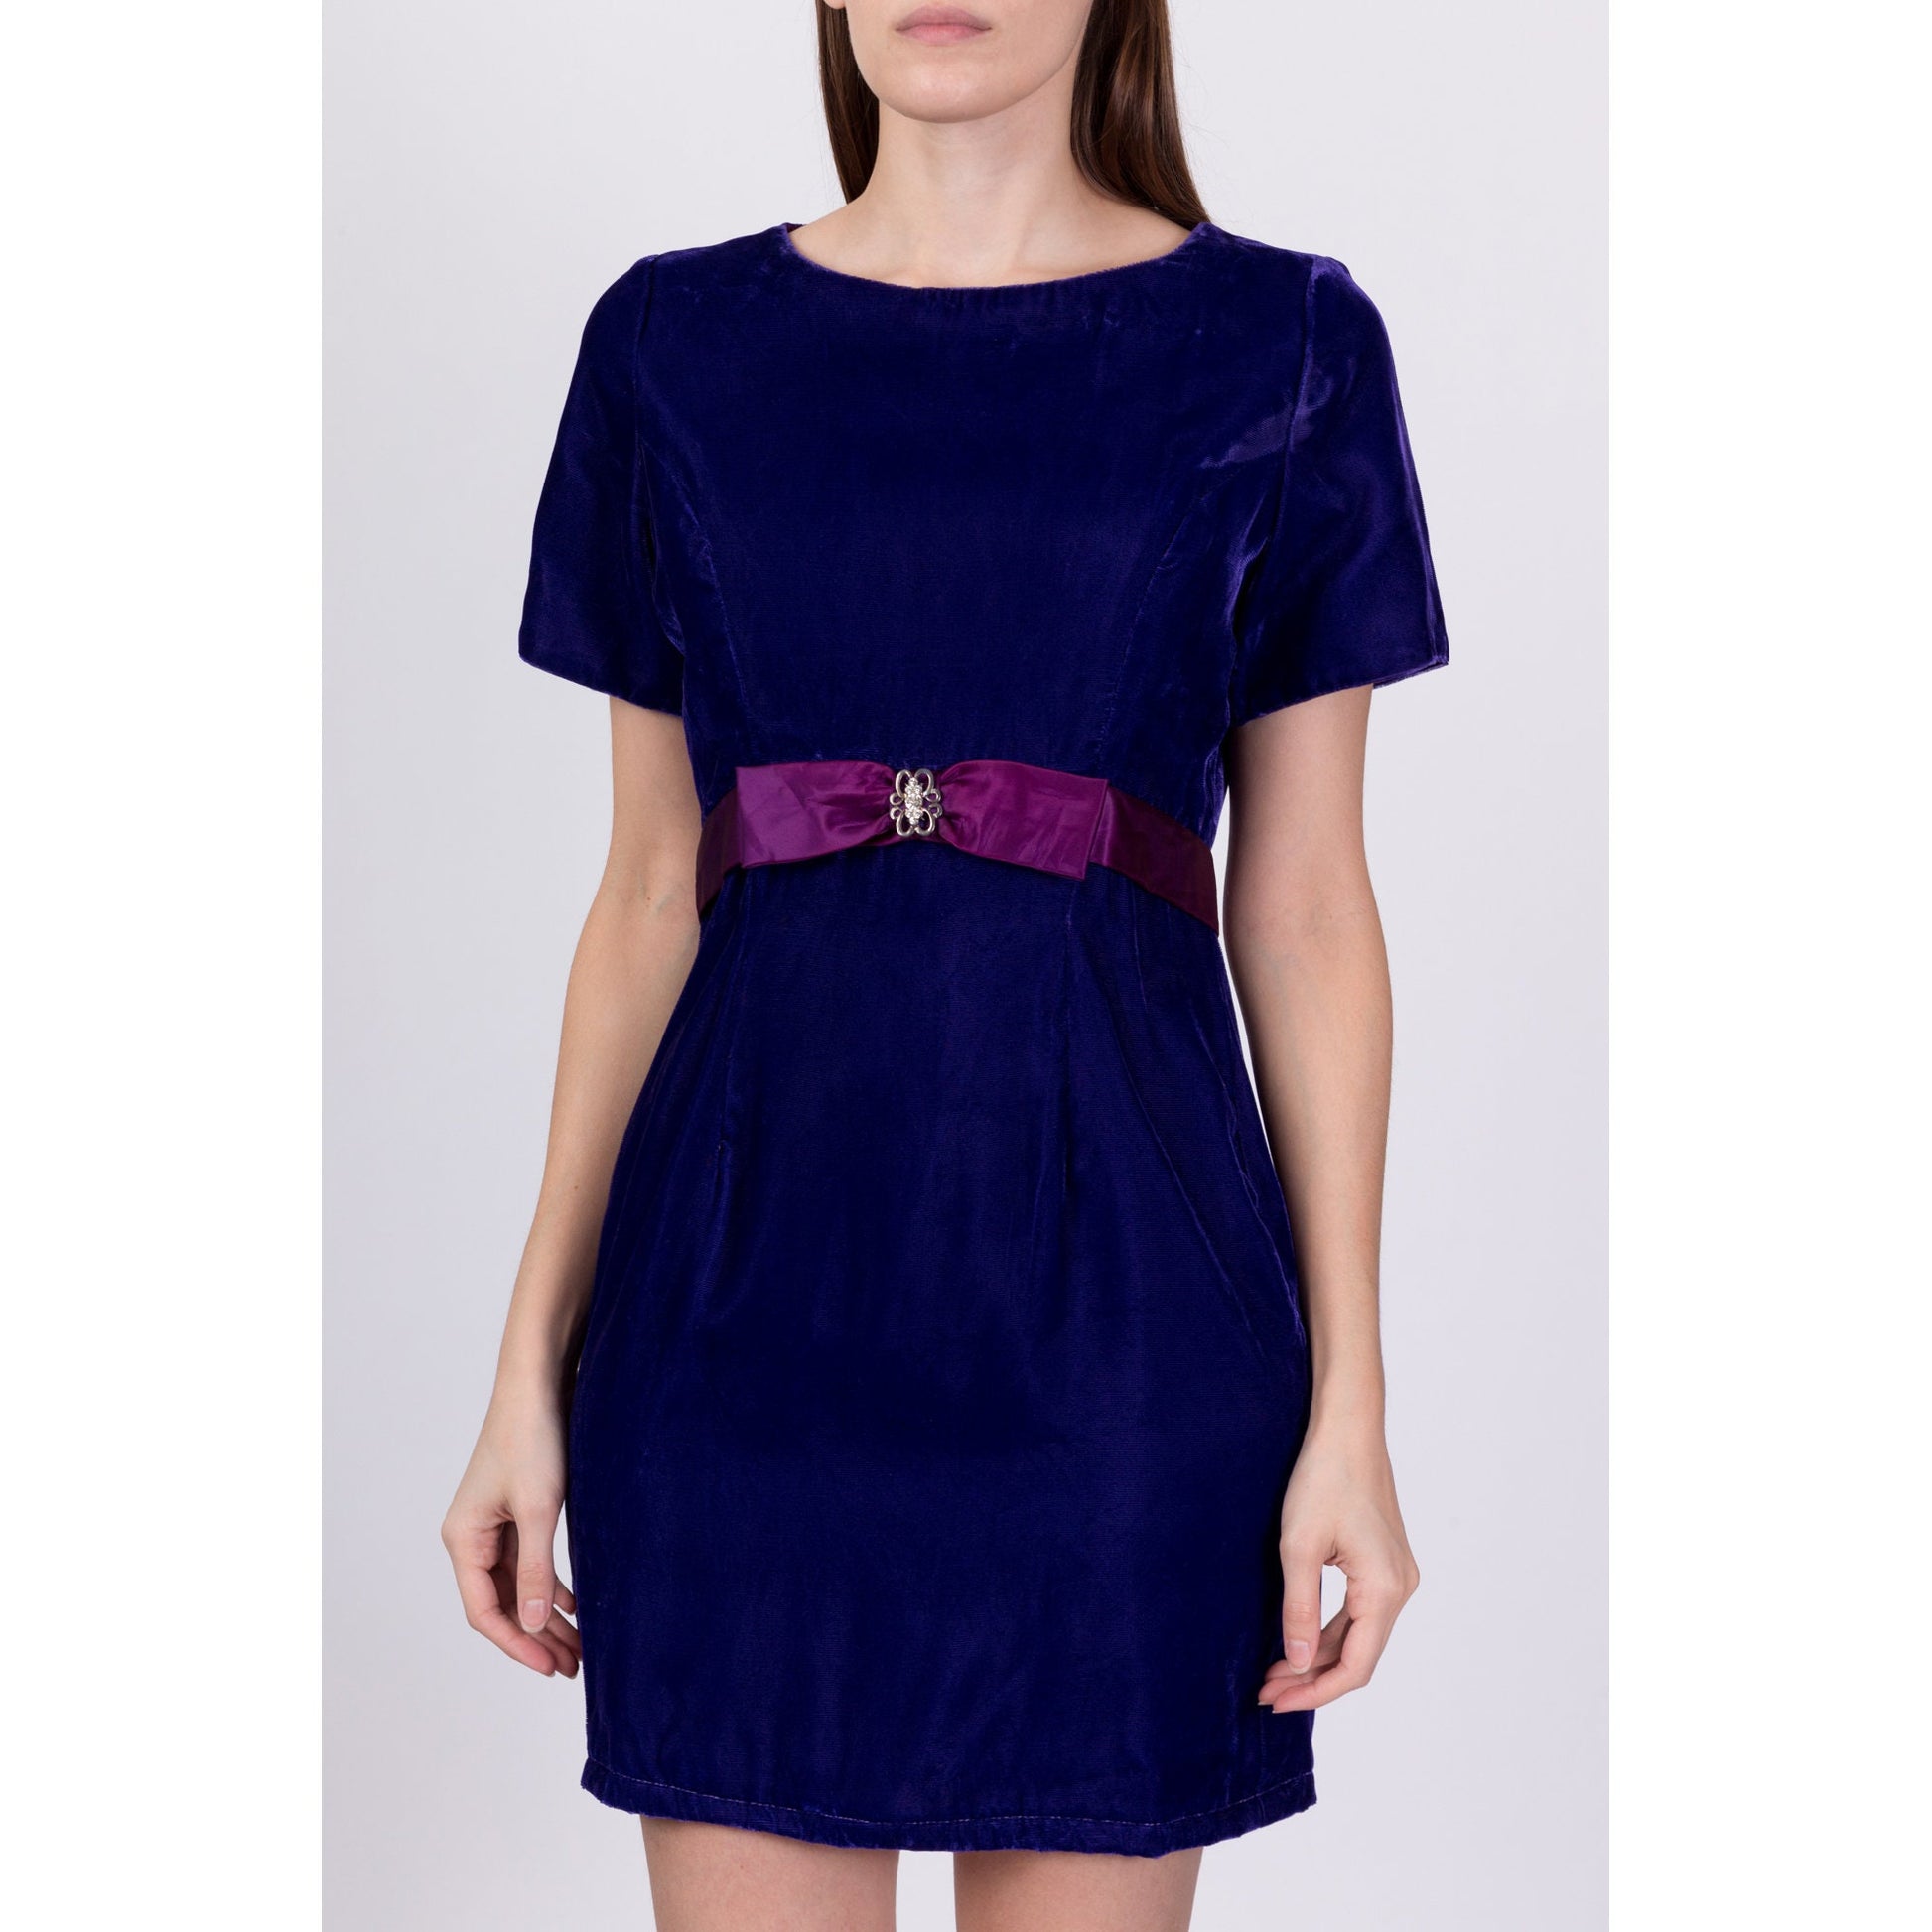 80s Royal Purple Velvet Party Dress - Medium 